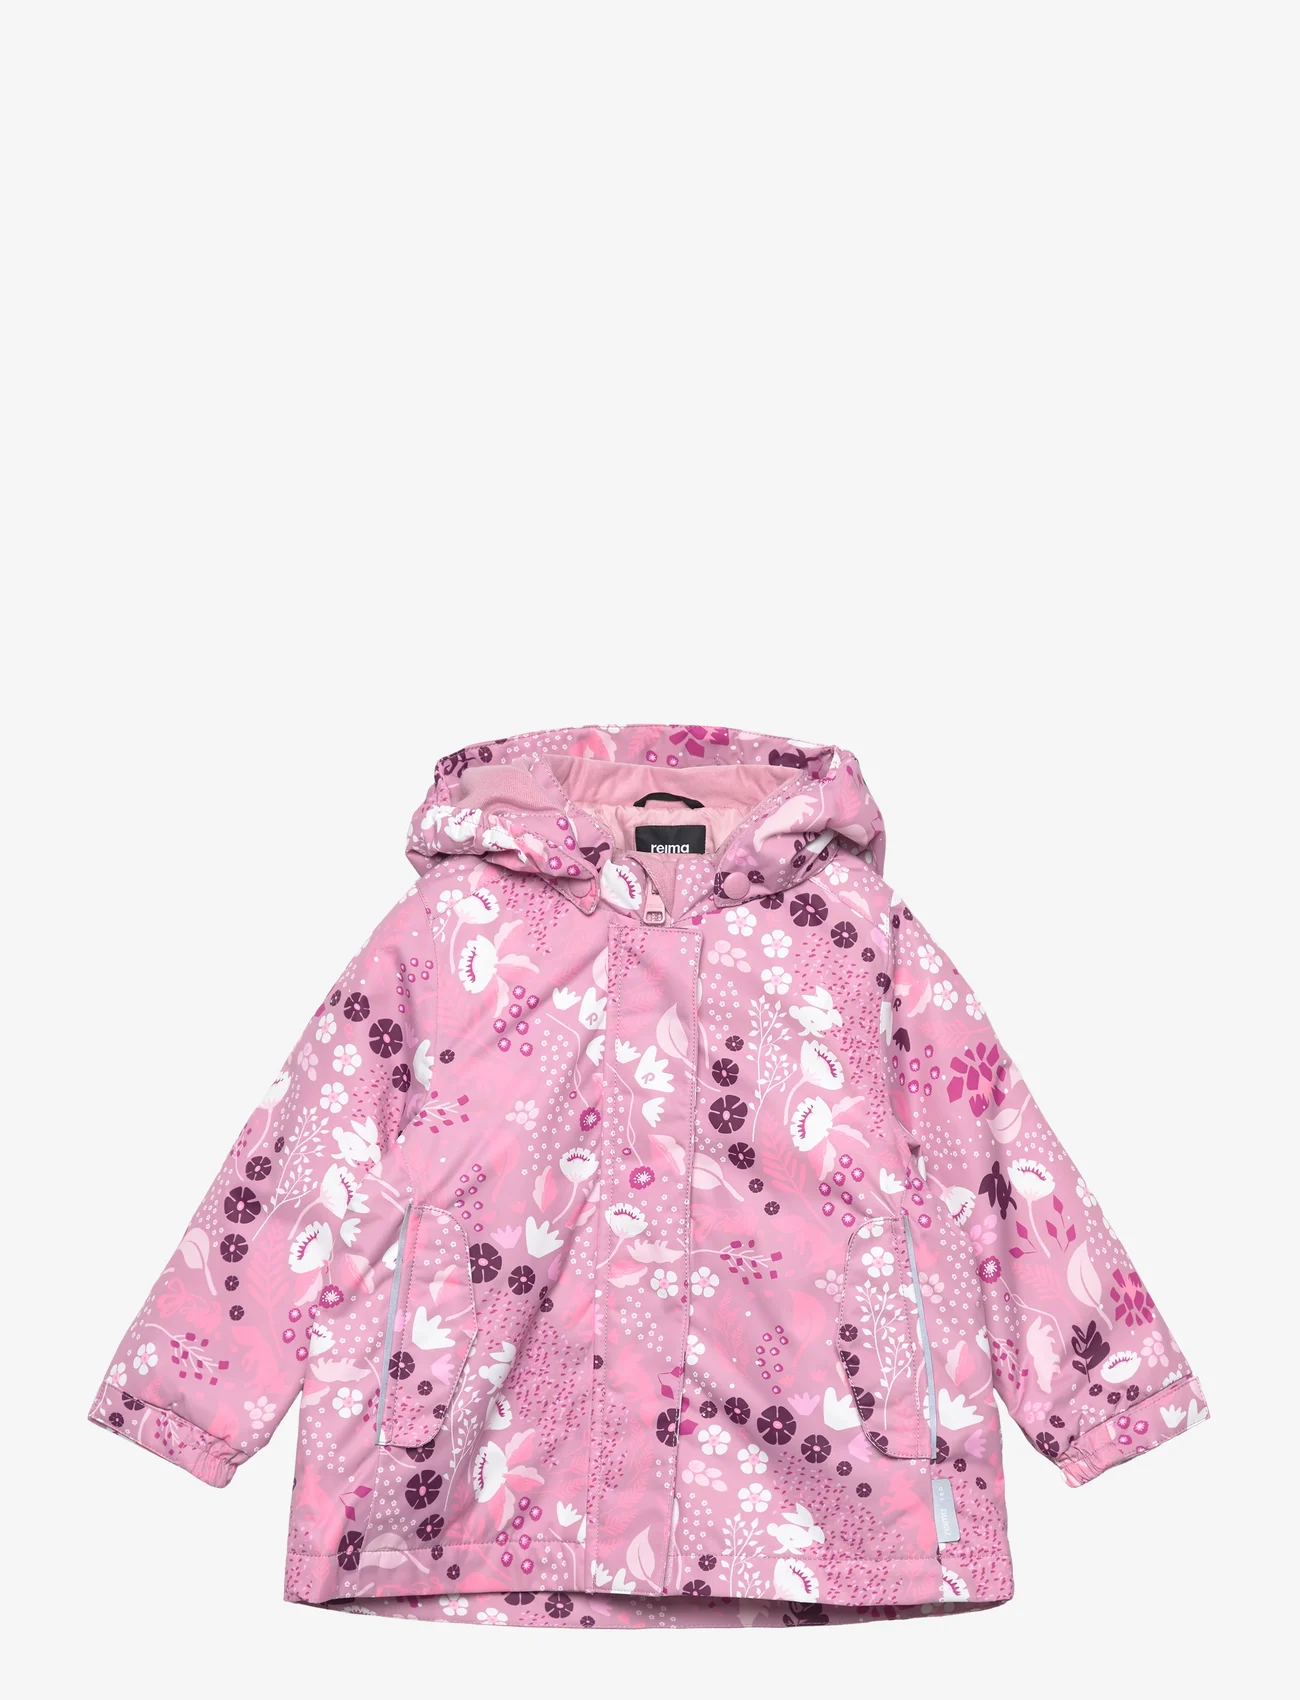 Reima - Toddlers' winter jacket Kuhmoinen - shell jackets - grey pink - 0